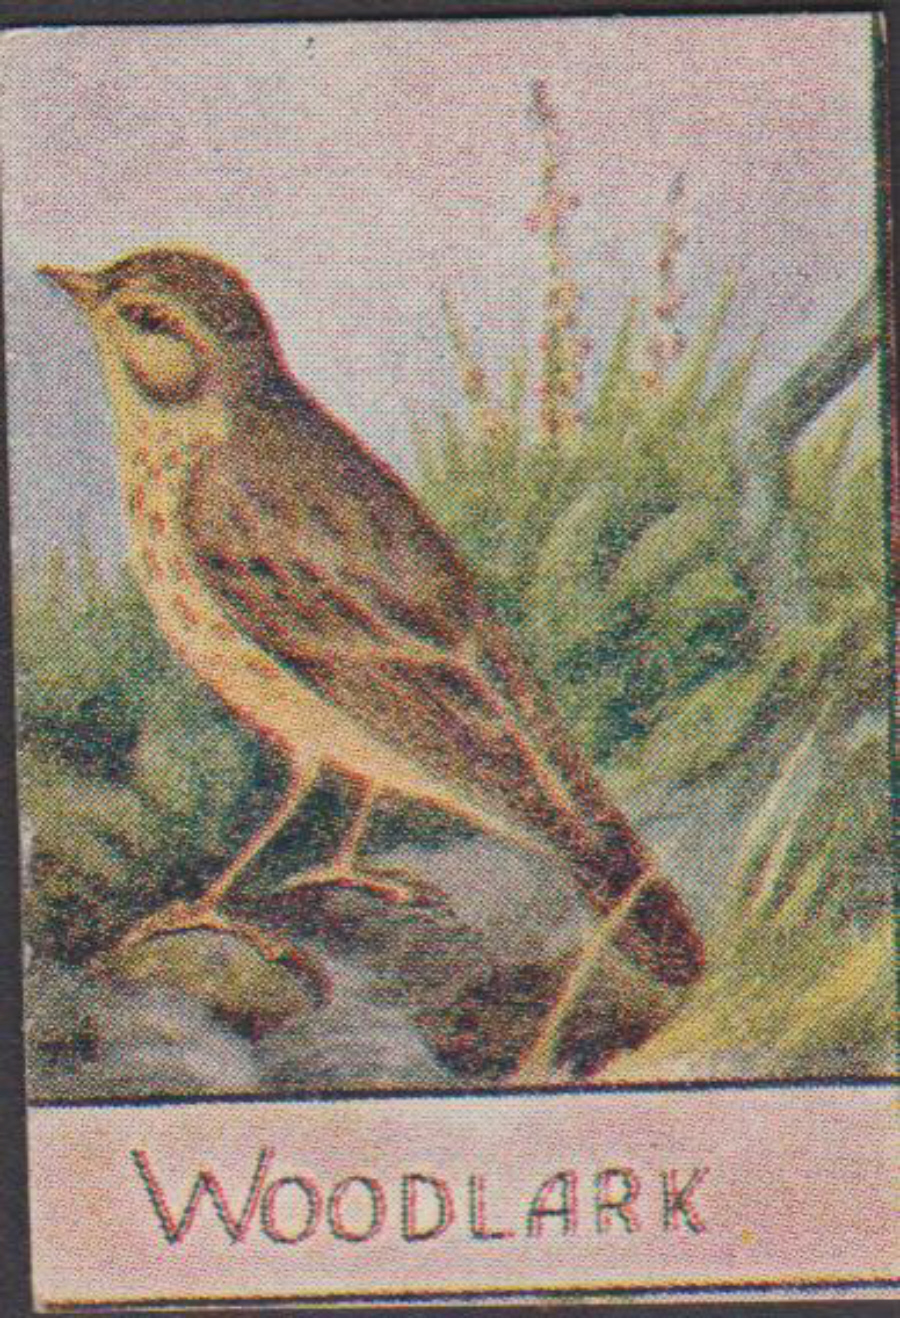 Spratt's British Bird Series Numbered No 89 Woodlark